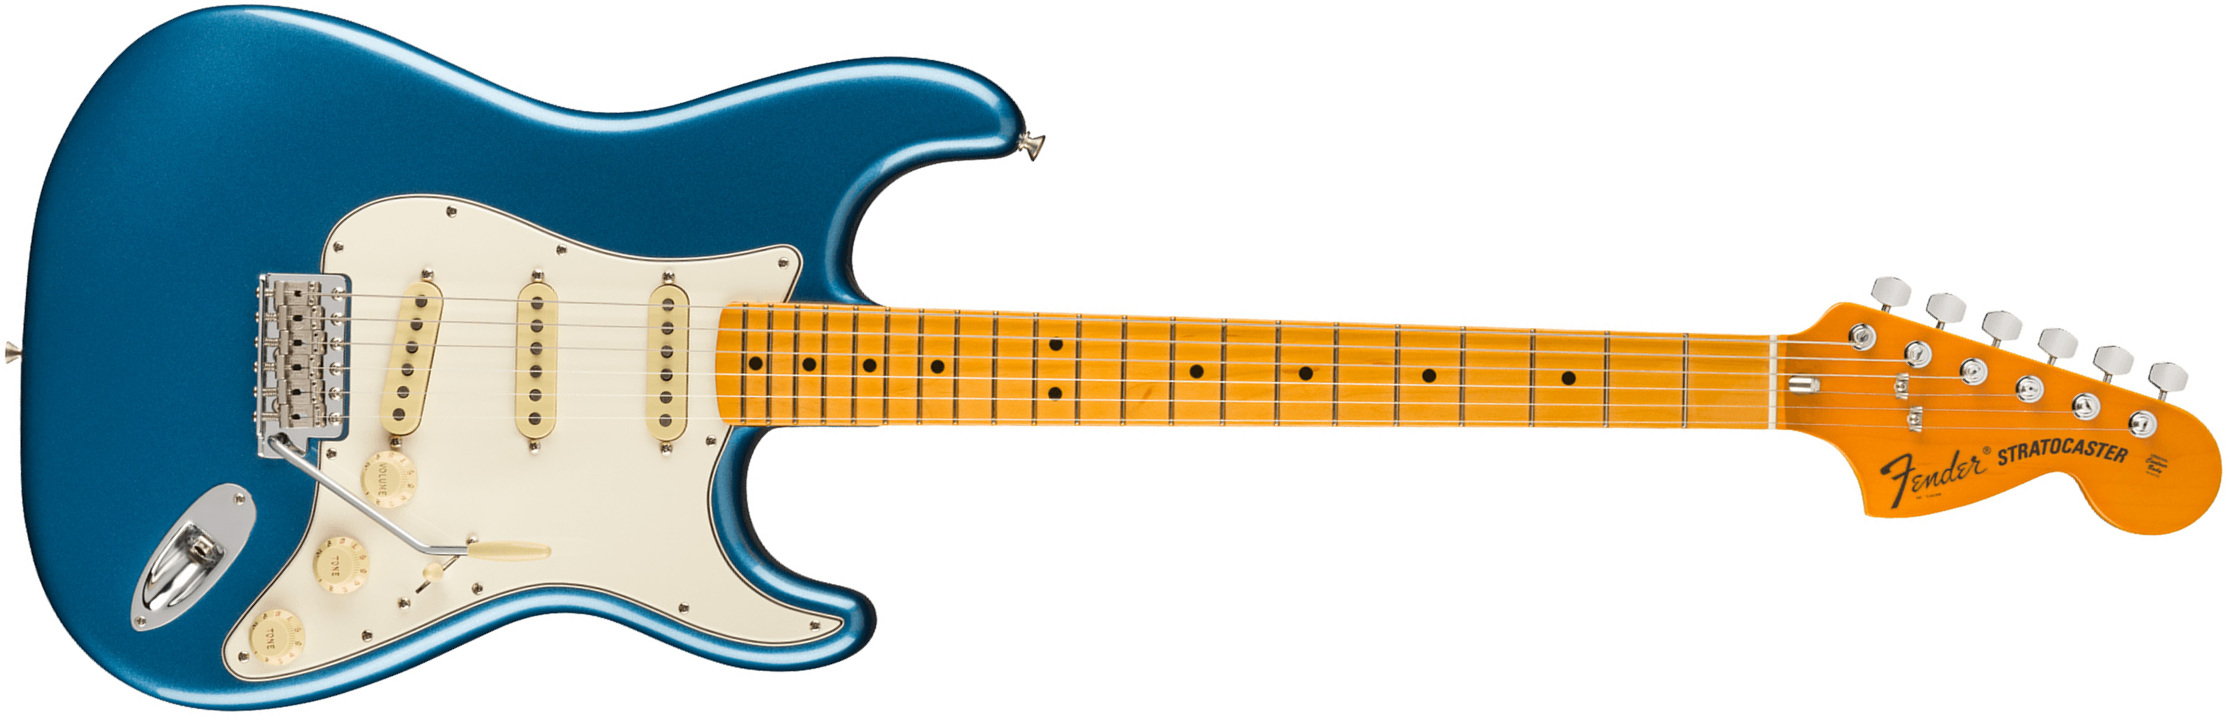 Fender Strat 1973 American Vintage Ii Usa 3s Trem Mn - Lake Placid Blue - Guitarra eléctrica con forma de str. - Main picture